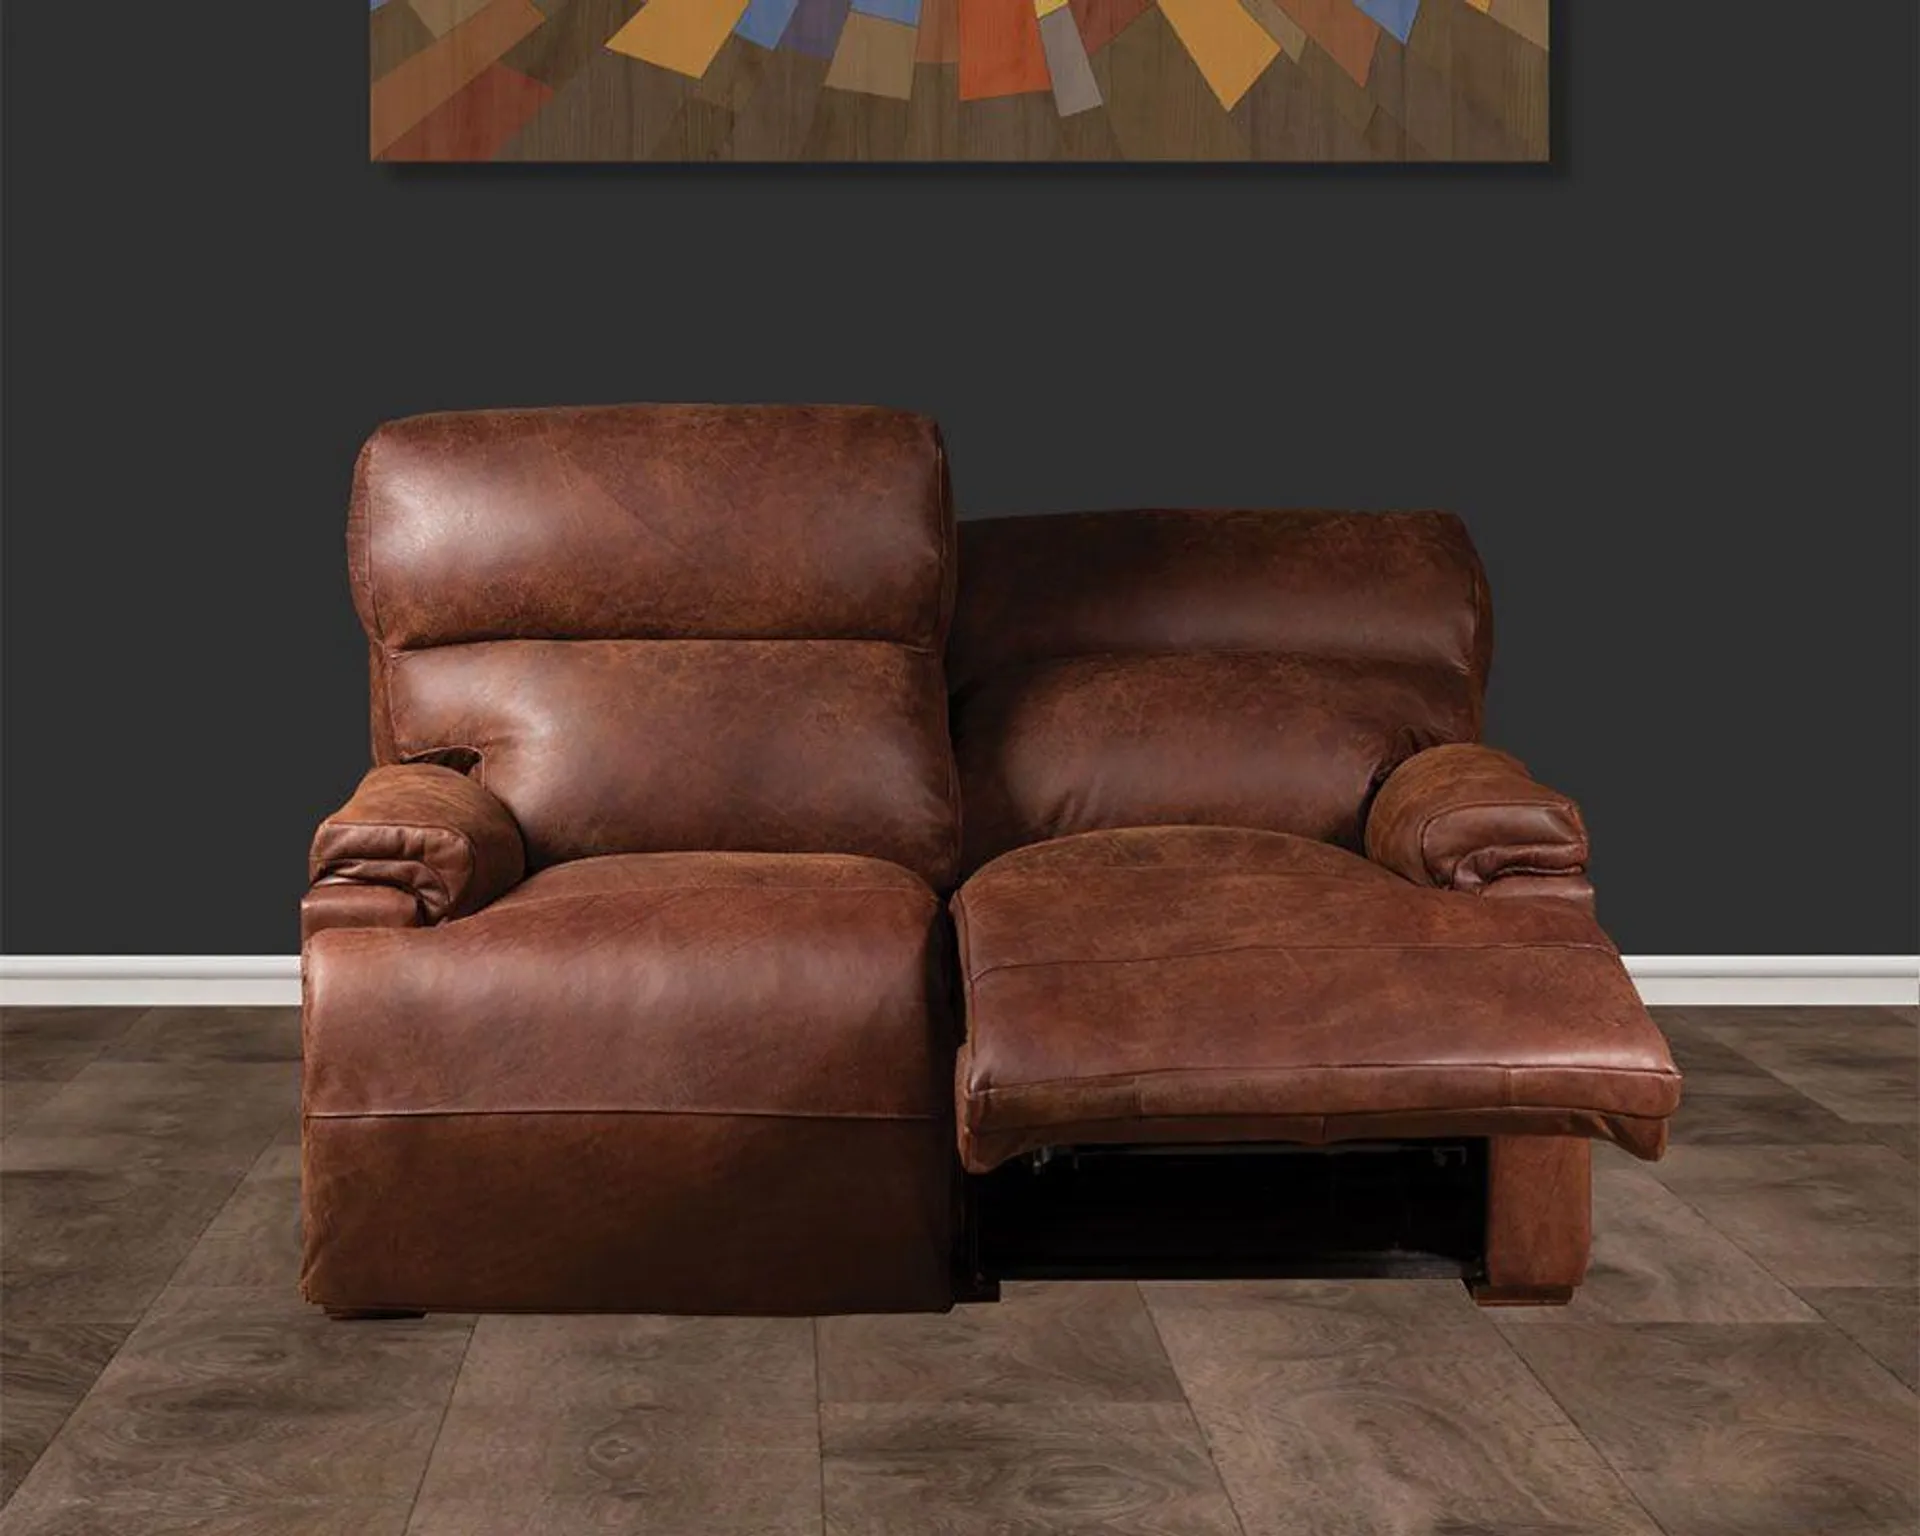 Easyliner recliner couch – 2 Divison